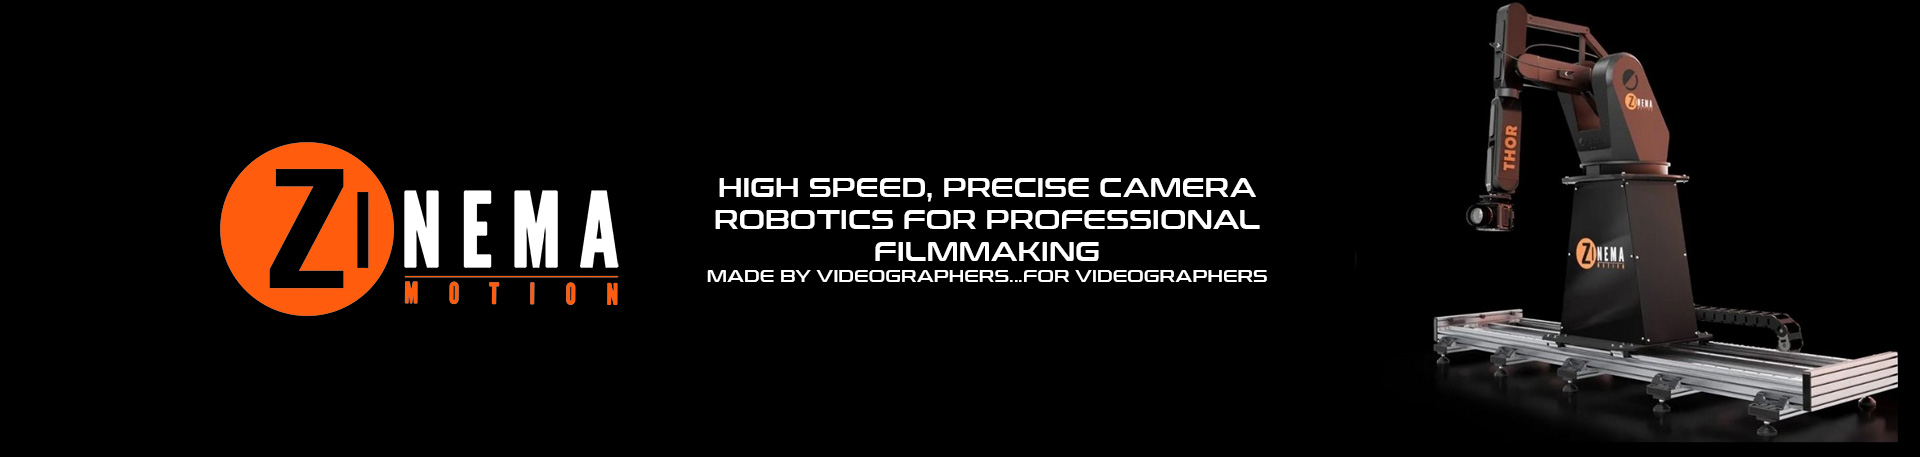 Zinema Motion High Speed Camera Robotics